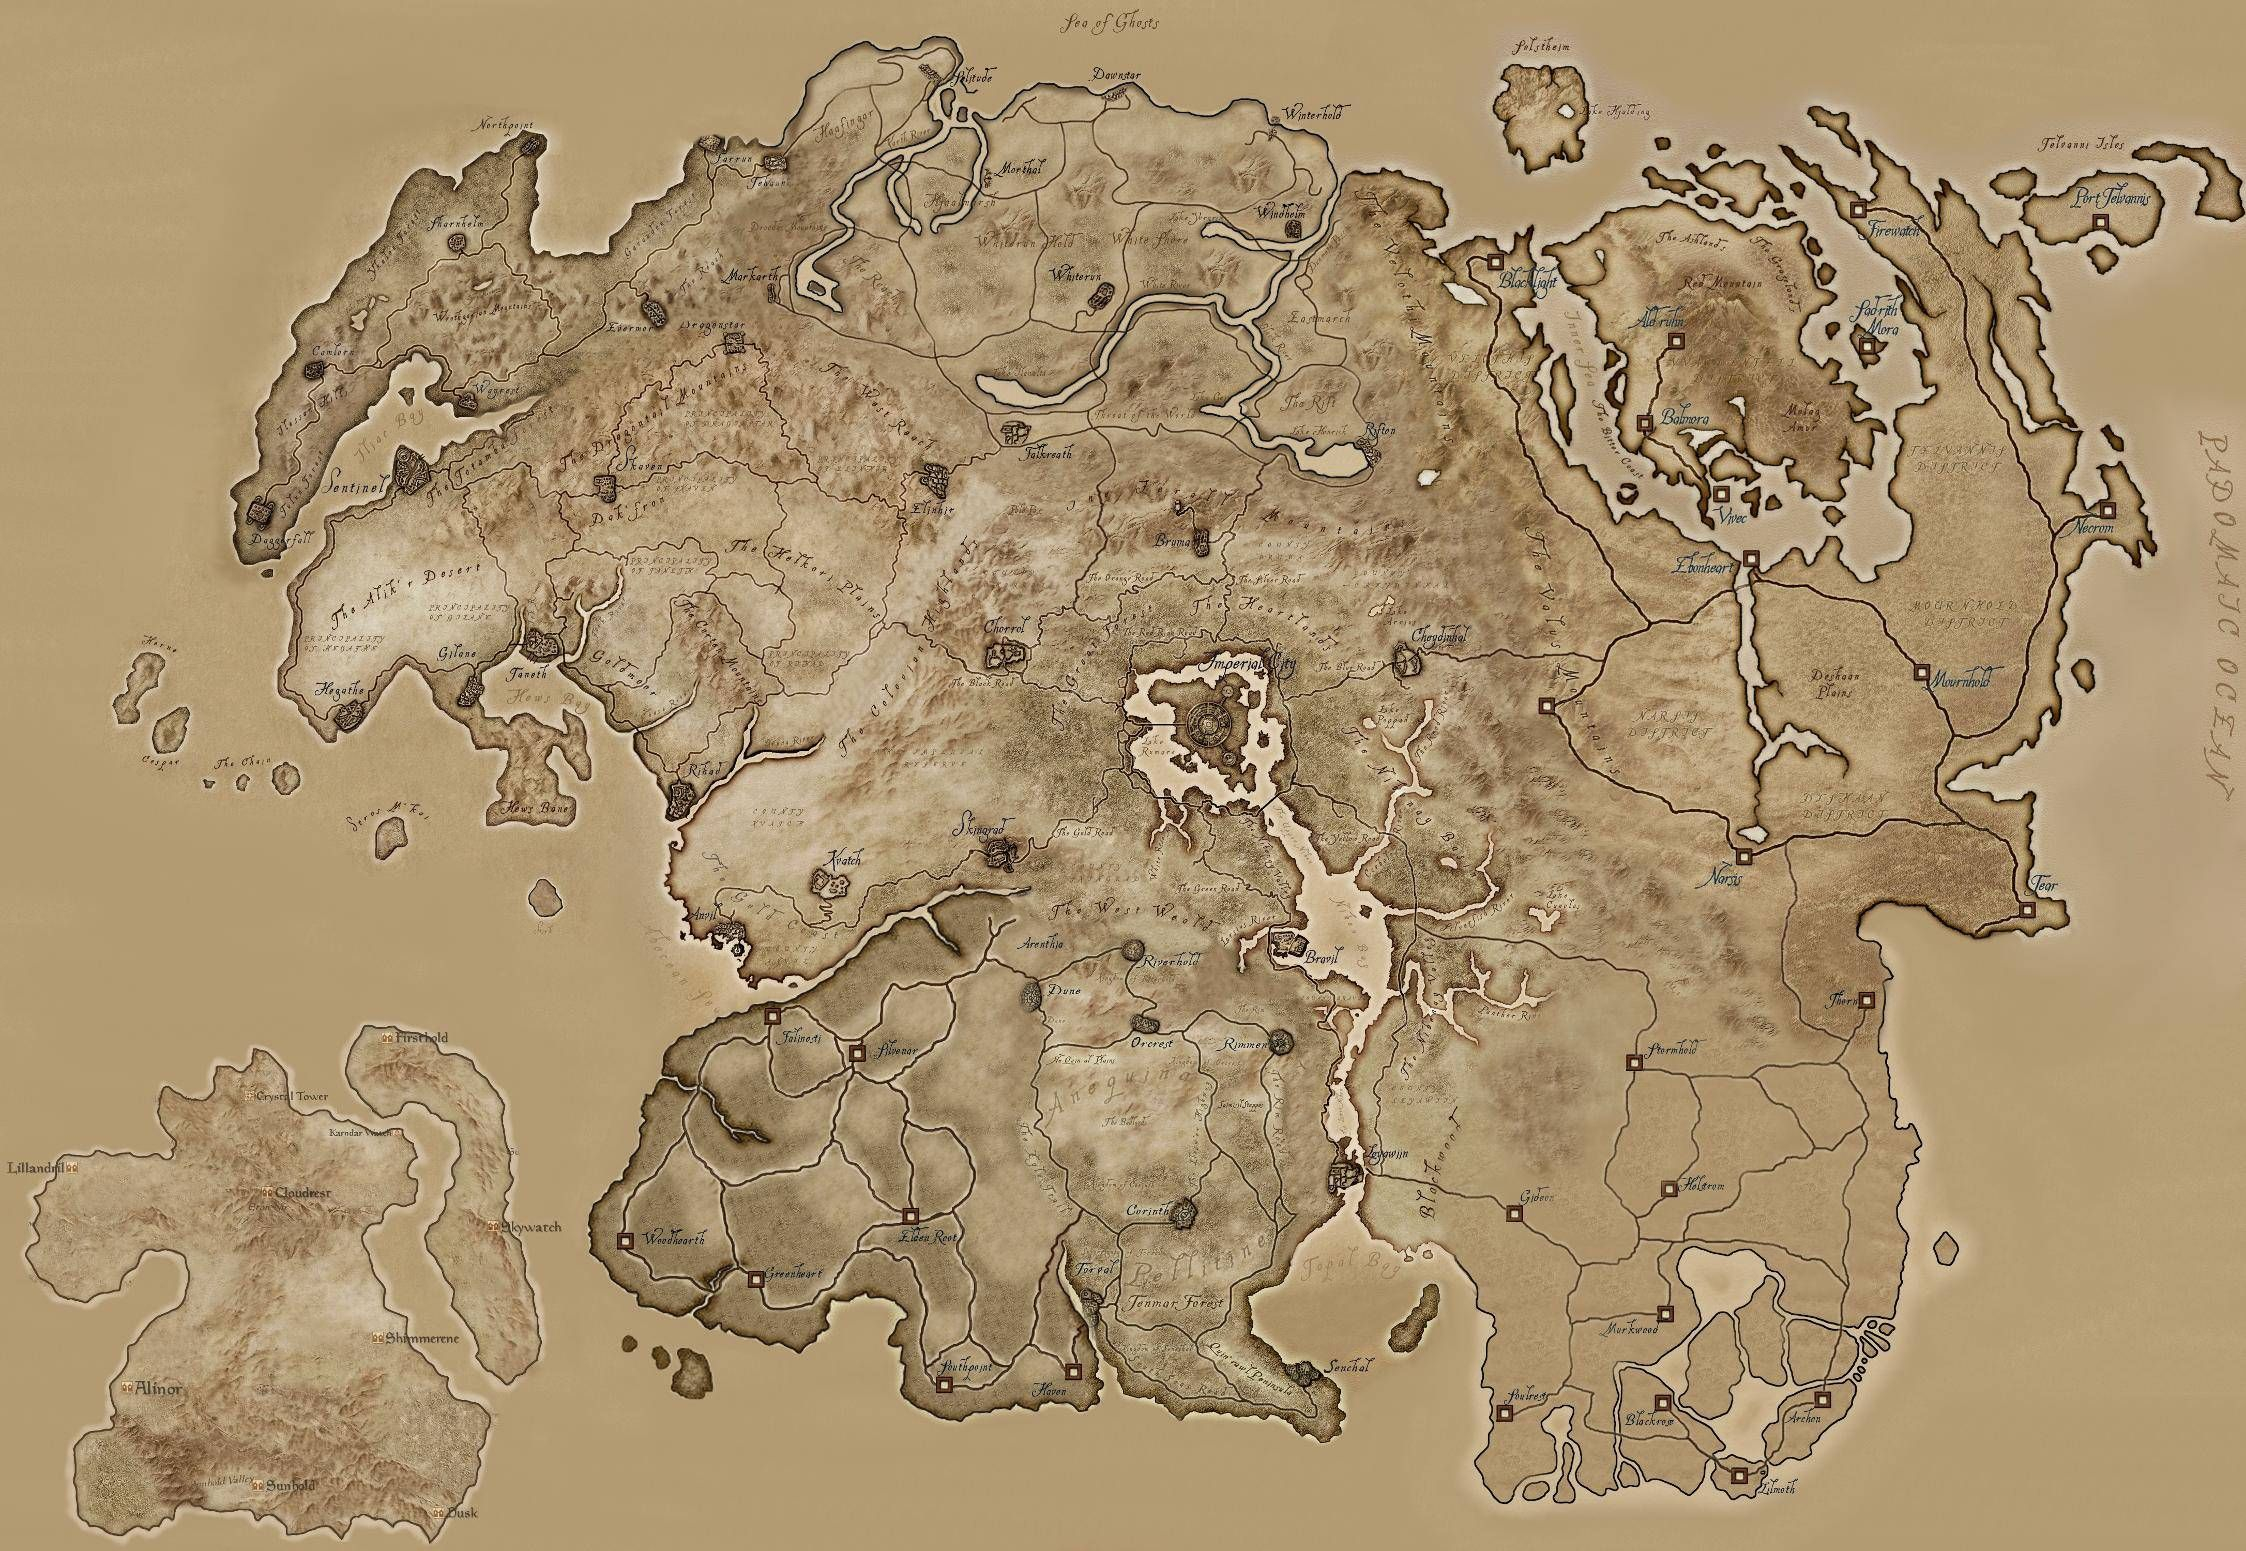 2246x1551 Tamriel | Elder Scrolls | Fandom | Elder scrolls, Fantasy map, Dnd world map